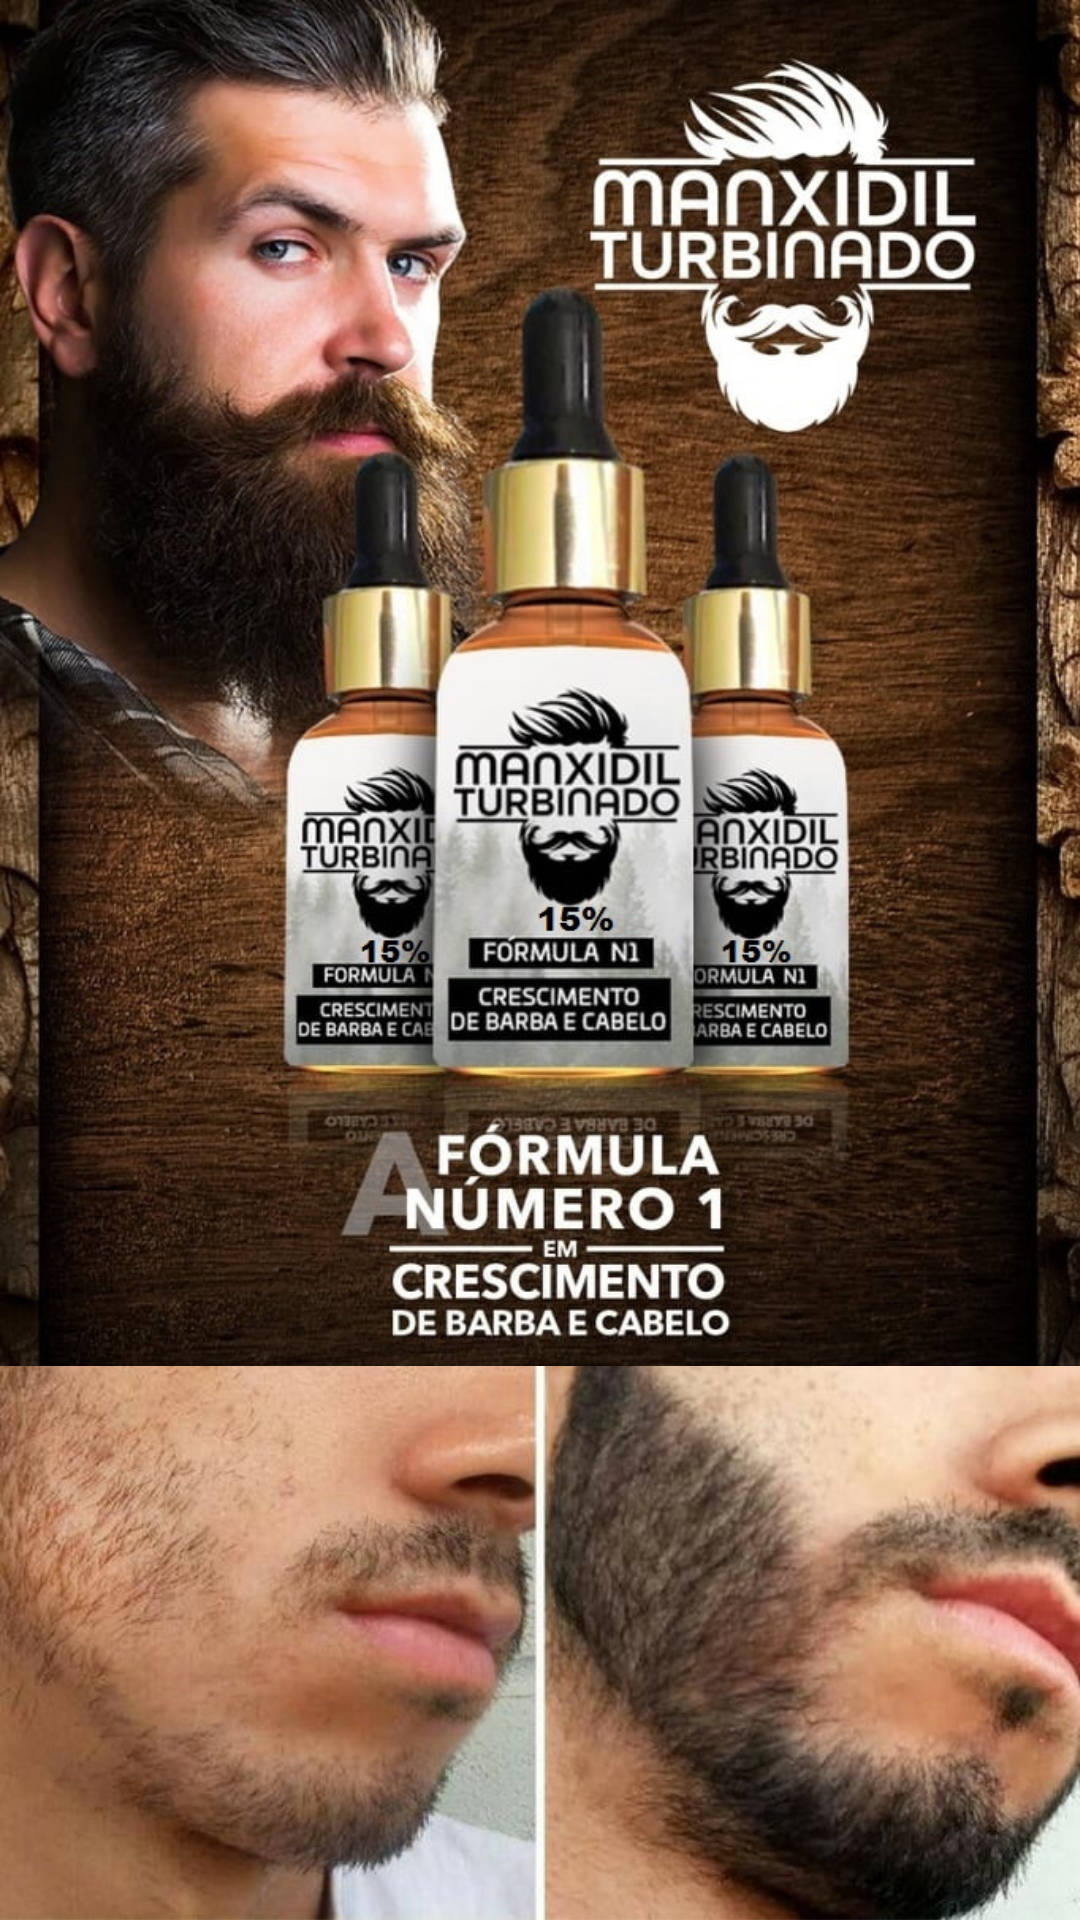 minoxidil barba, minoxidil cabelo e sobrancelha, manxidil turbinado, produto para crescer barba e cabelo